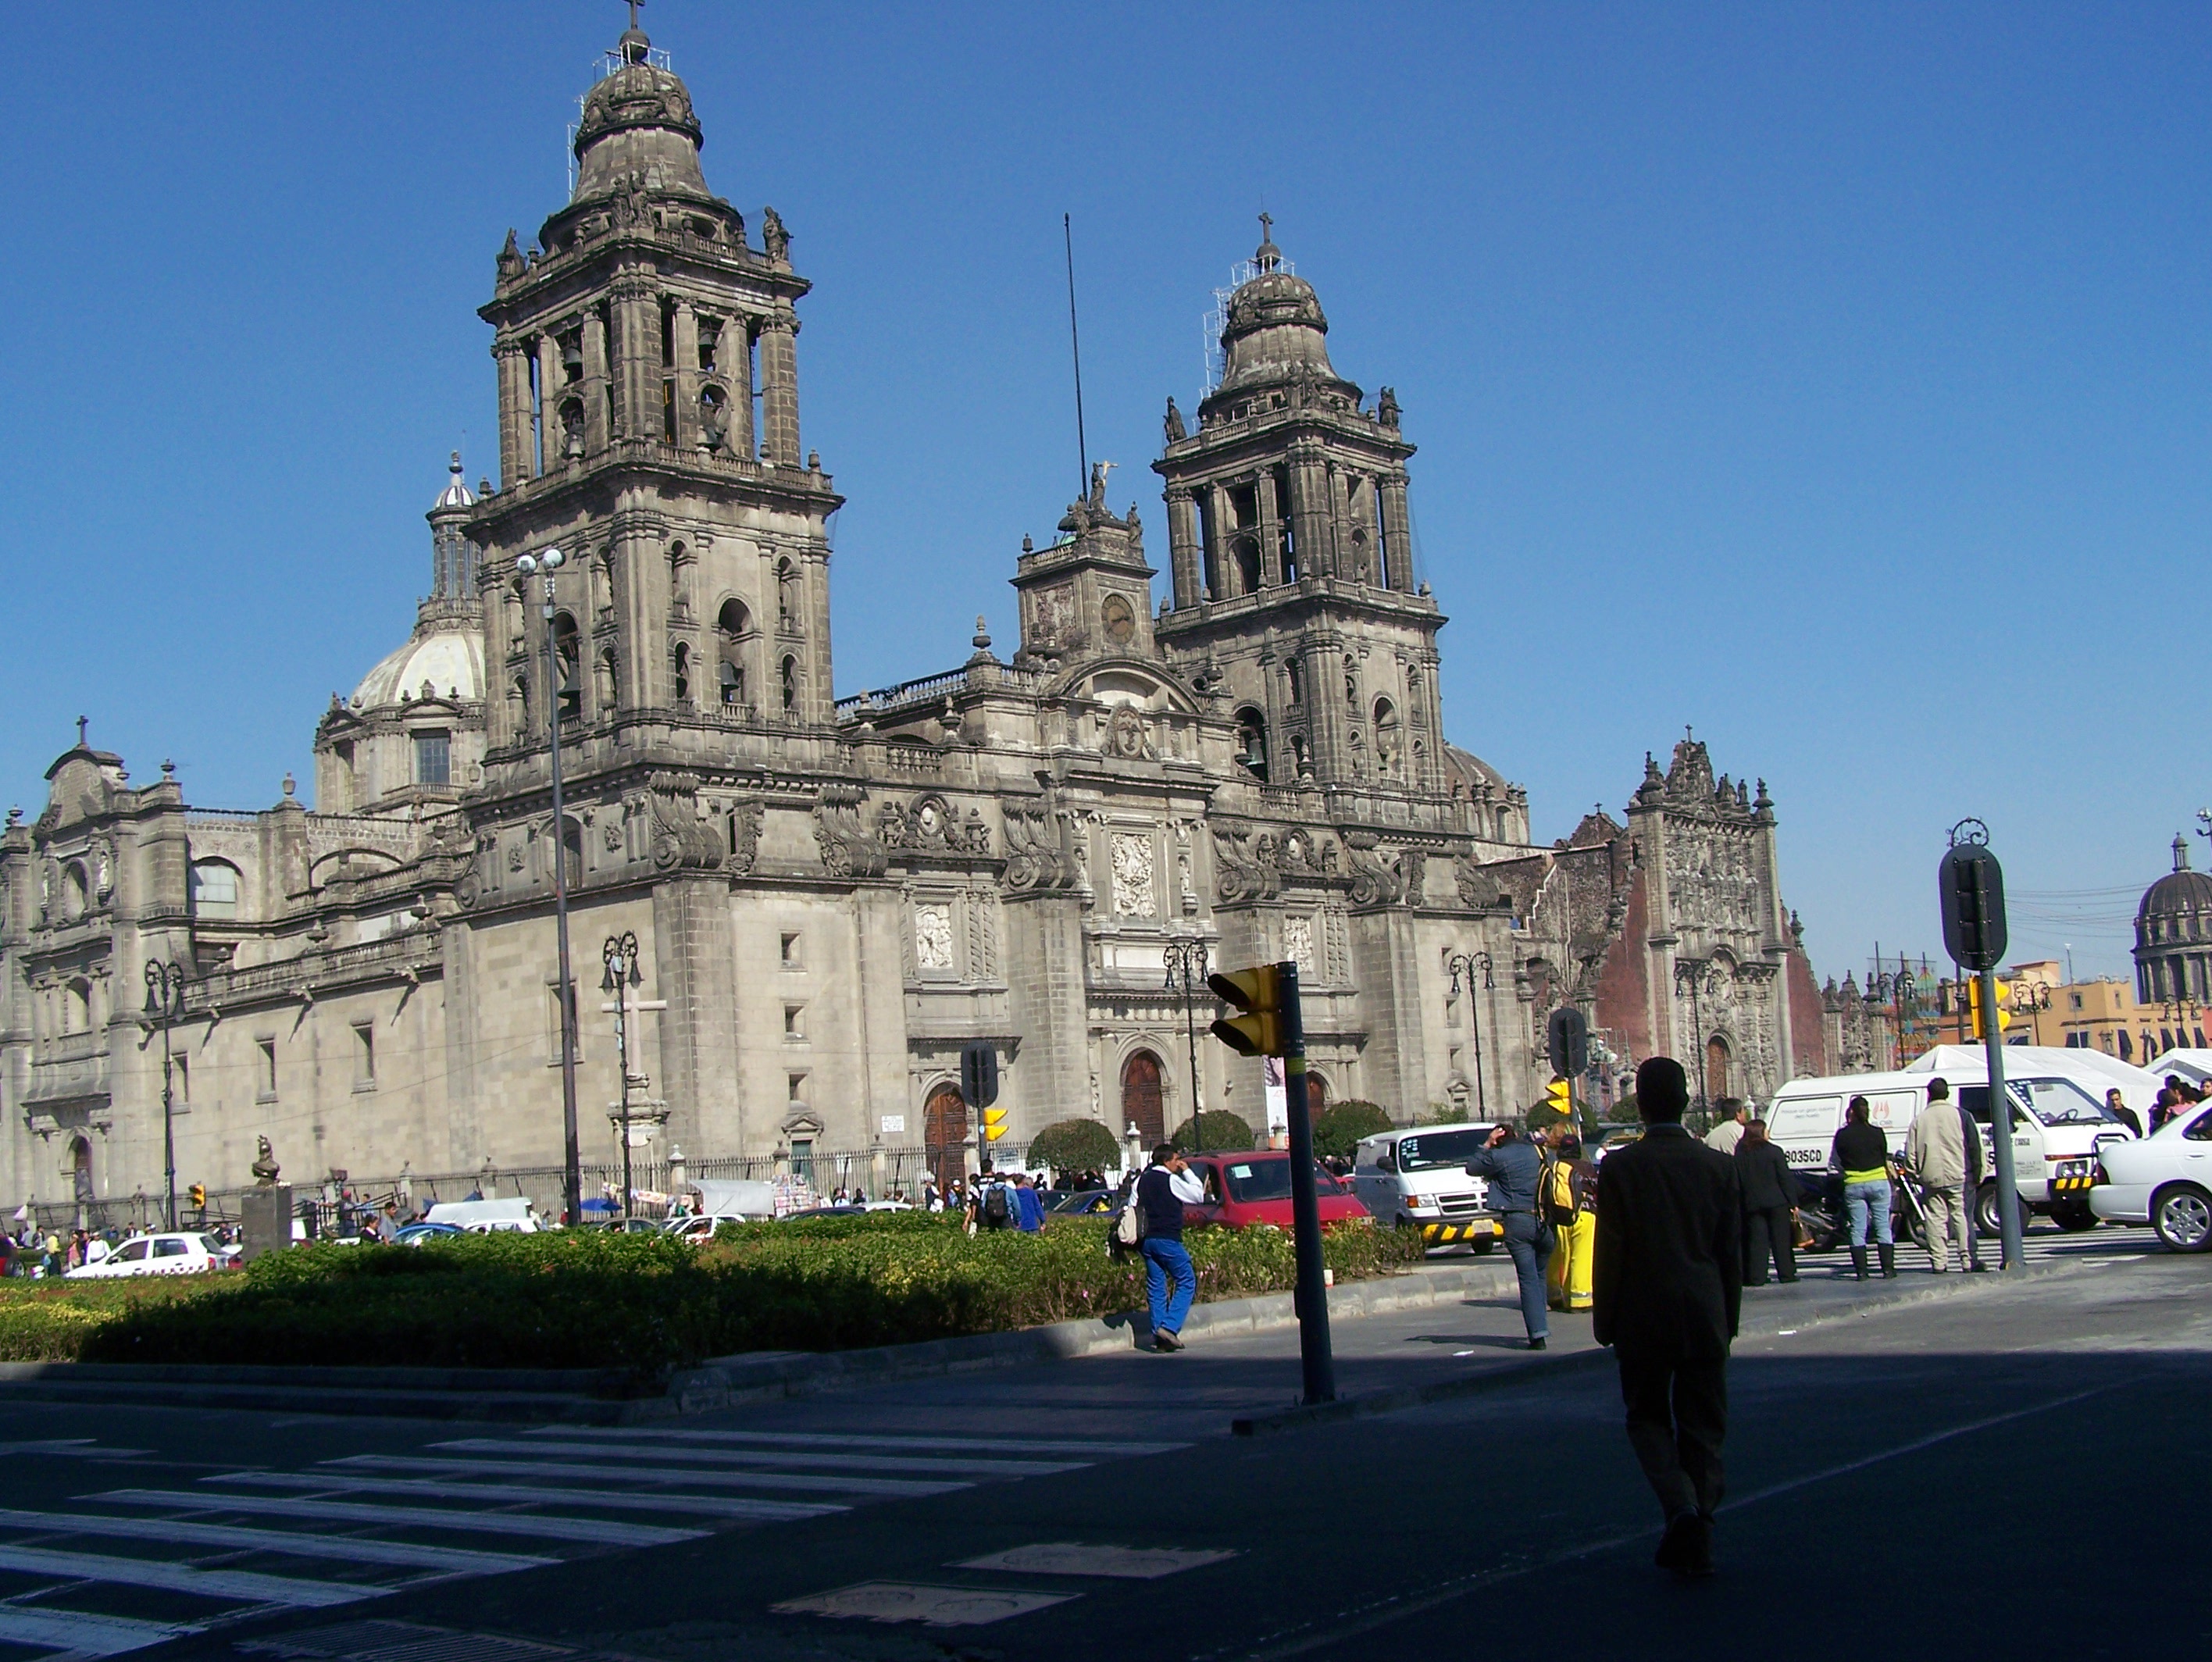 File:Catedral de la ciudad de mexico.JPG - Wikimedia Commons